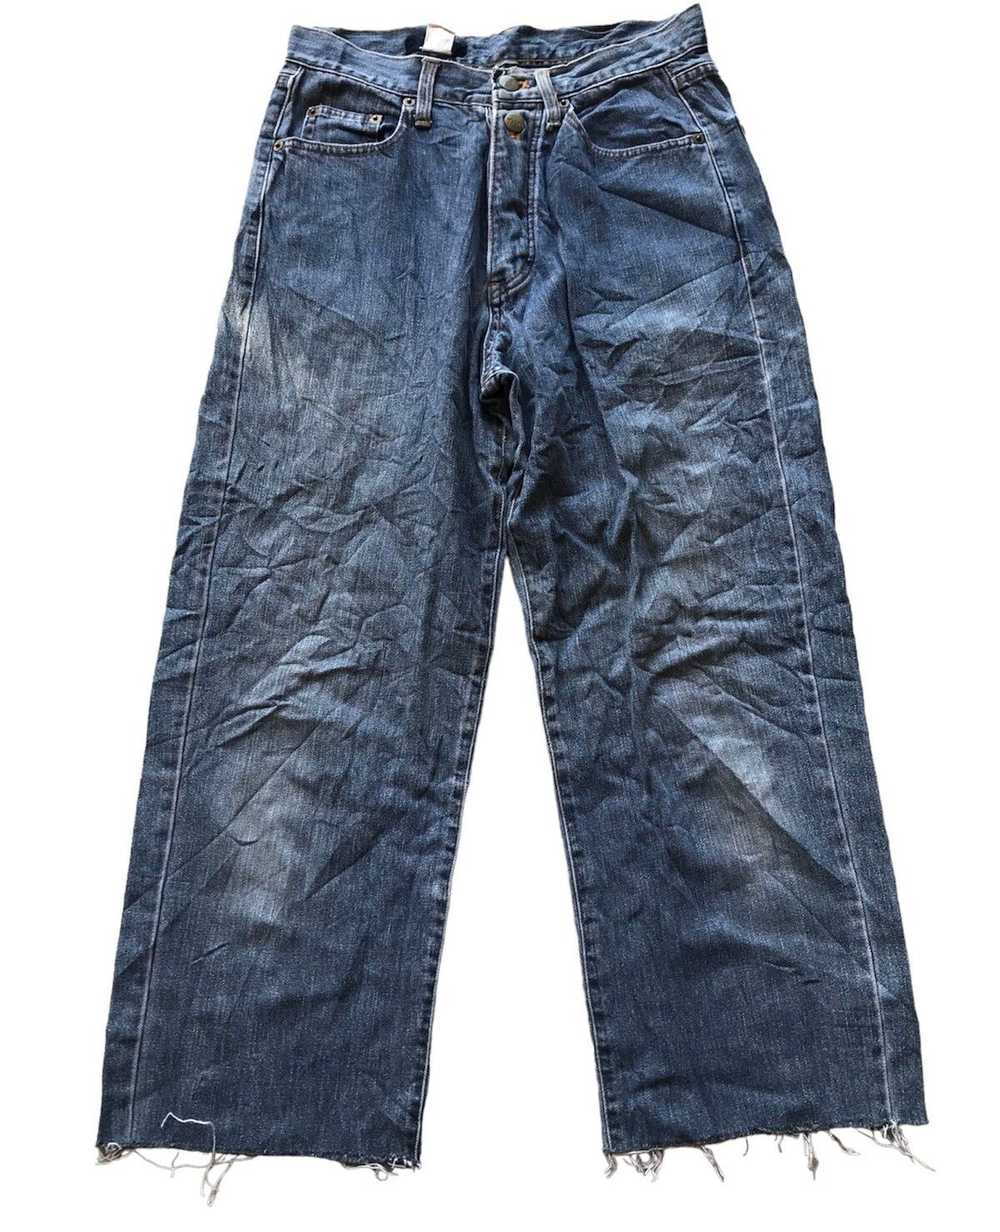 Yohji Yamamoto Ys Bis 3 Quarter Cropped Jeans - image 1